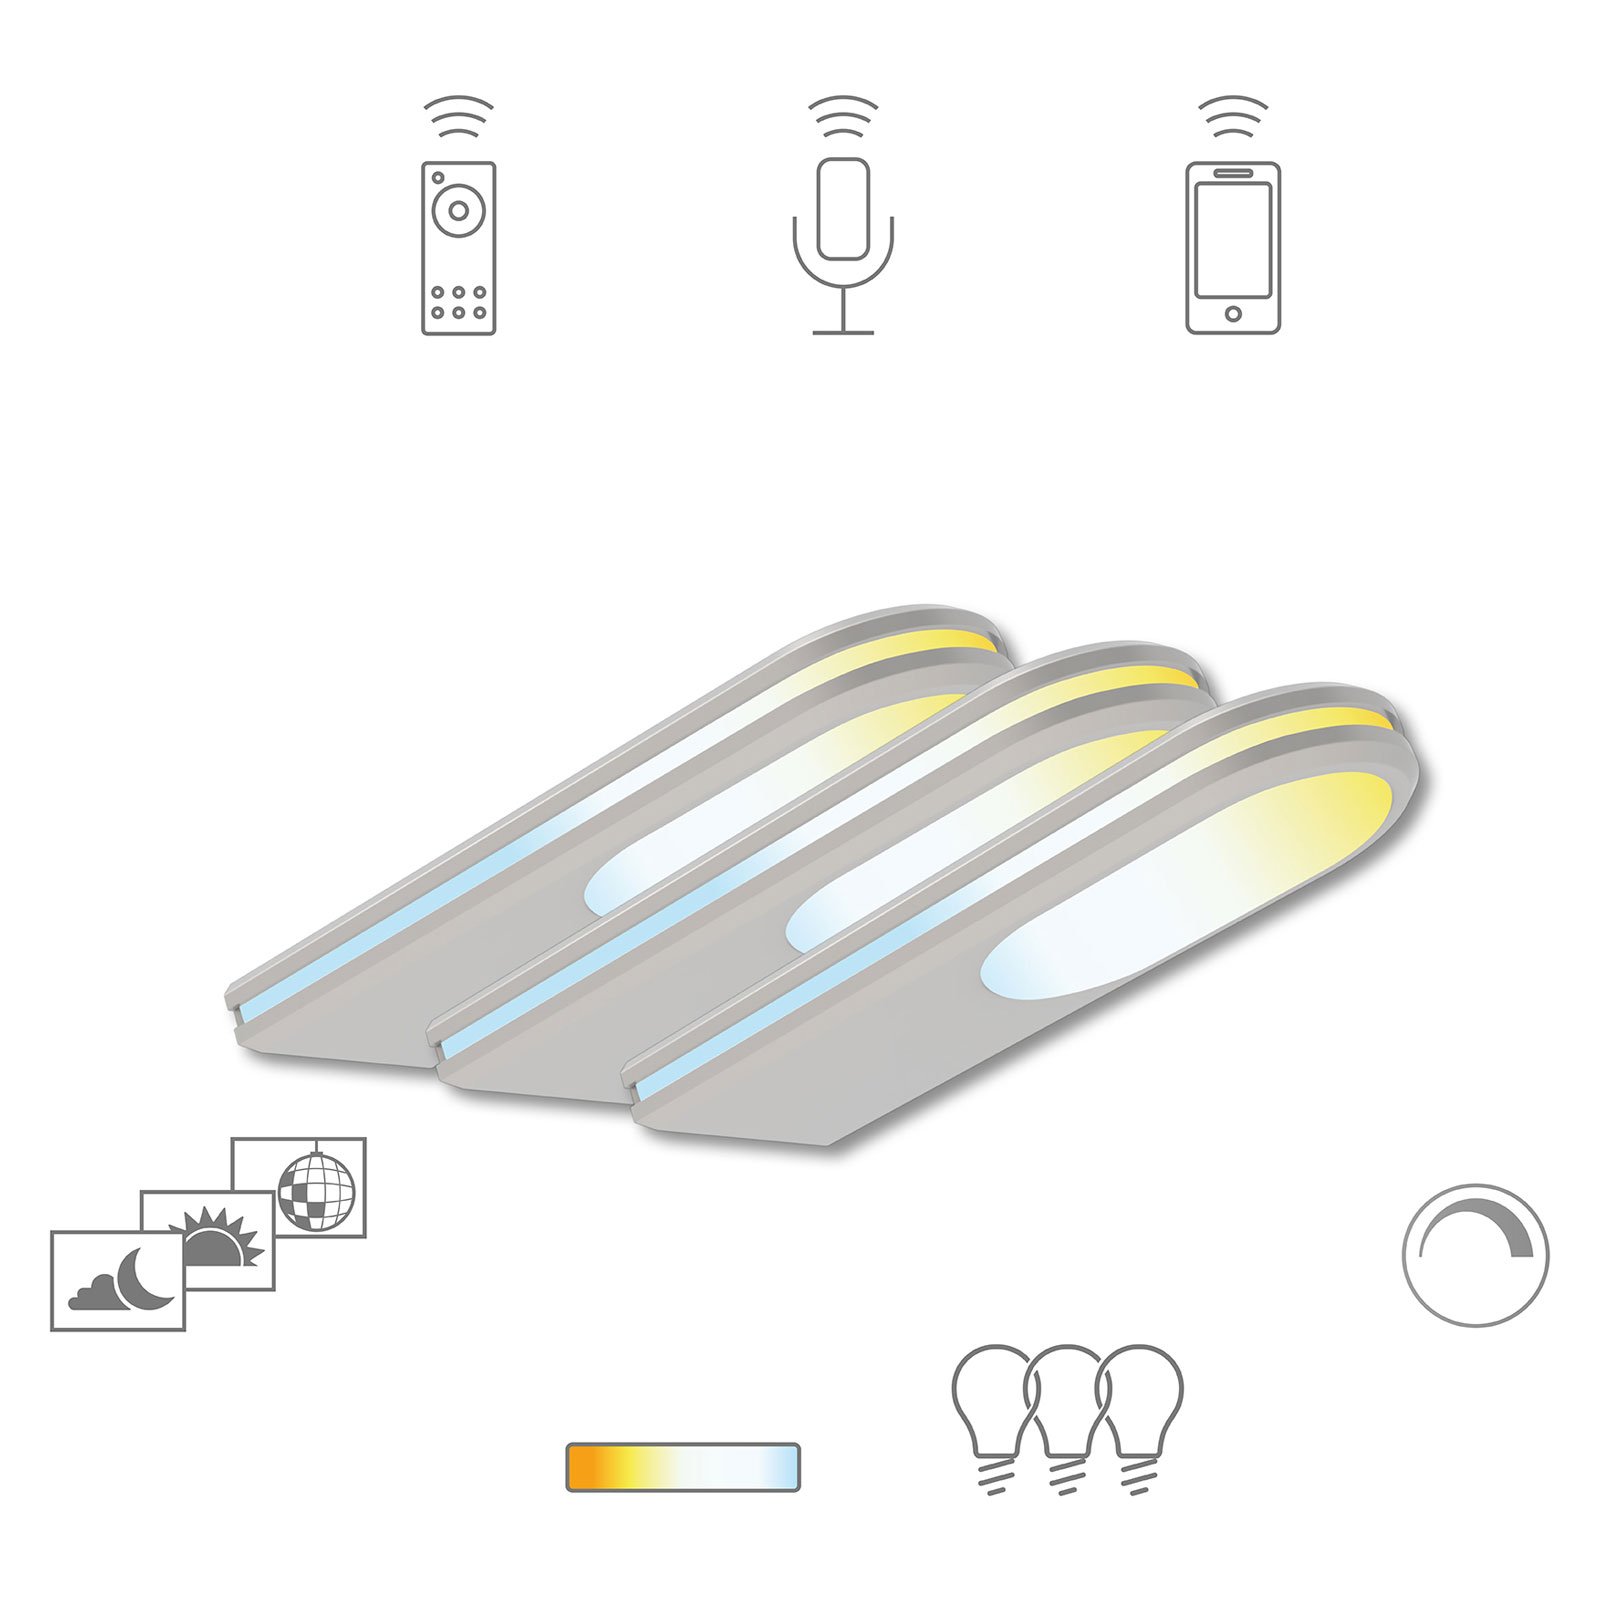 Müller Licht tint LED meubelverlichting Armaro, 3 stuks